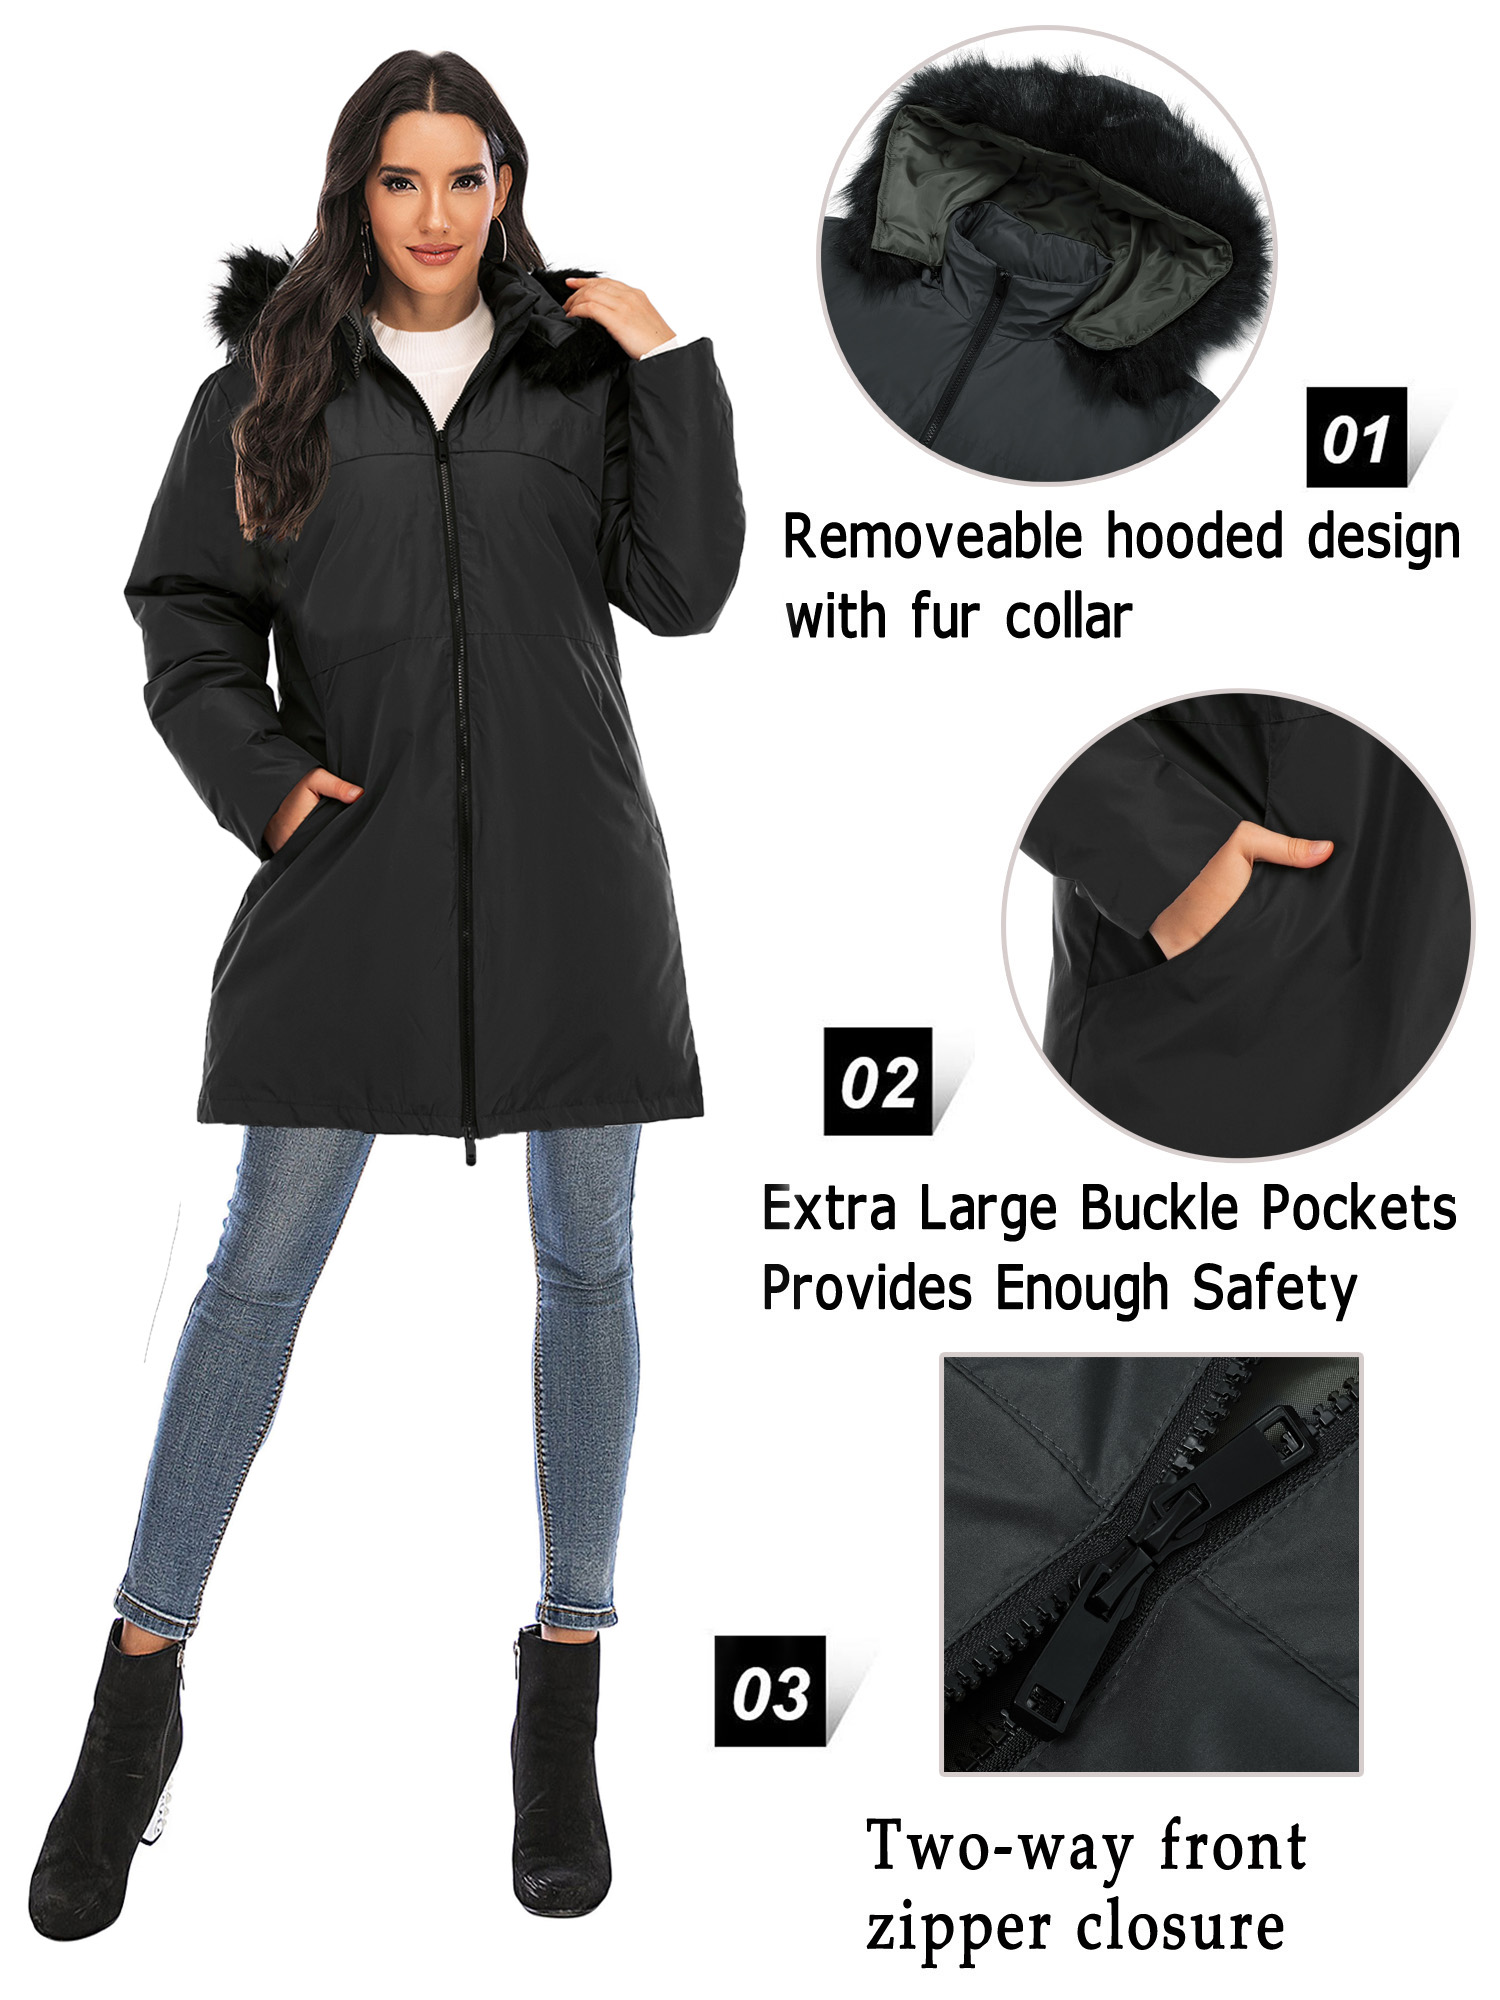 LELINTA Winter Plus Size Long Hoodie Coat Warm Jacket for Women, Zipper Parka Overcoats Raincoat Active Outdoor Trench Coat - image 2 of 7